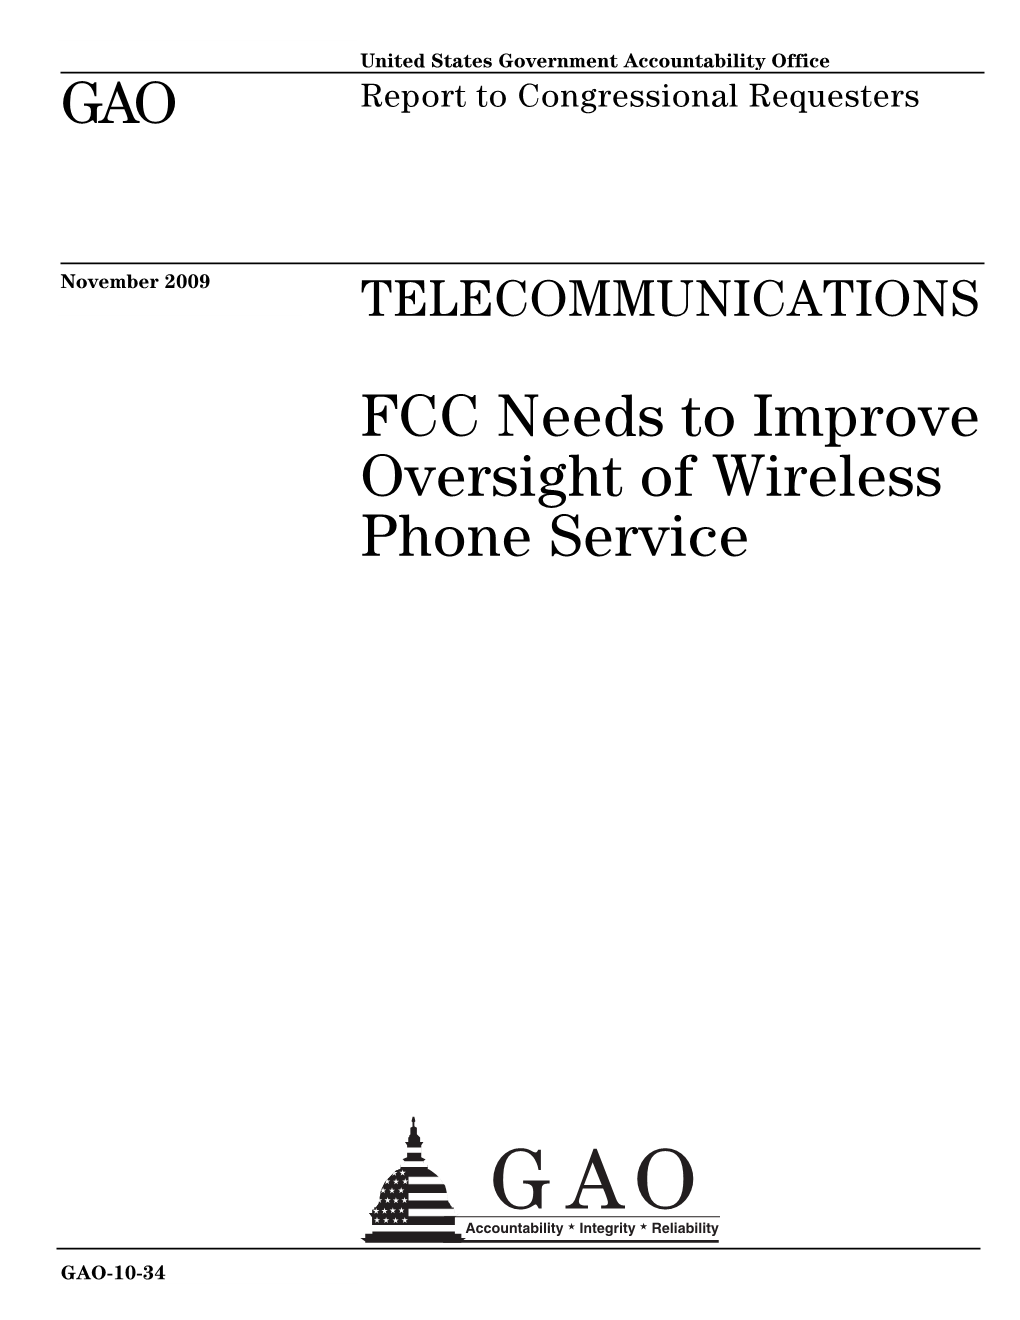 FCC Needs to Improve Oversight of Wireless Phone Service